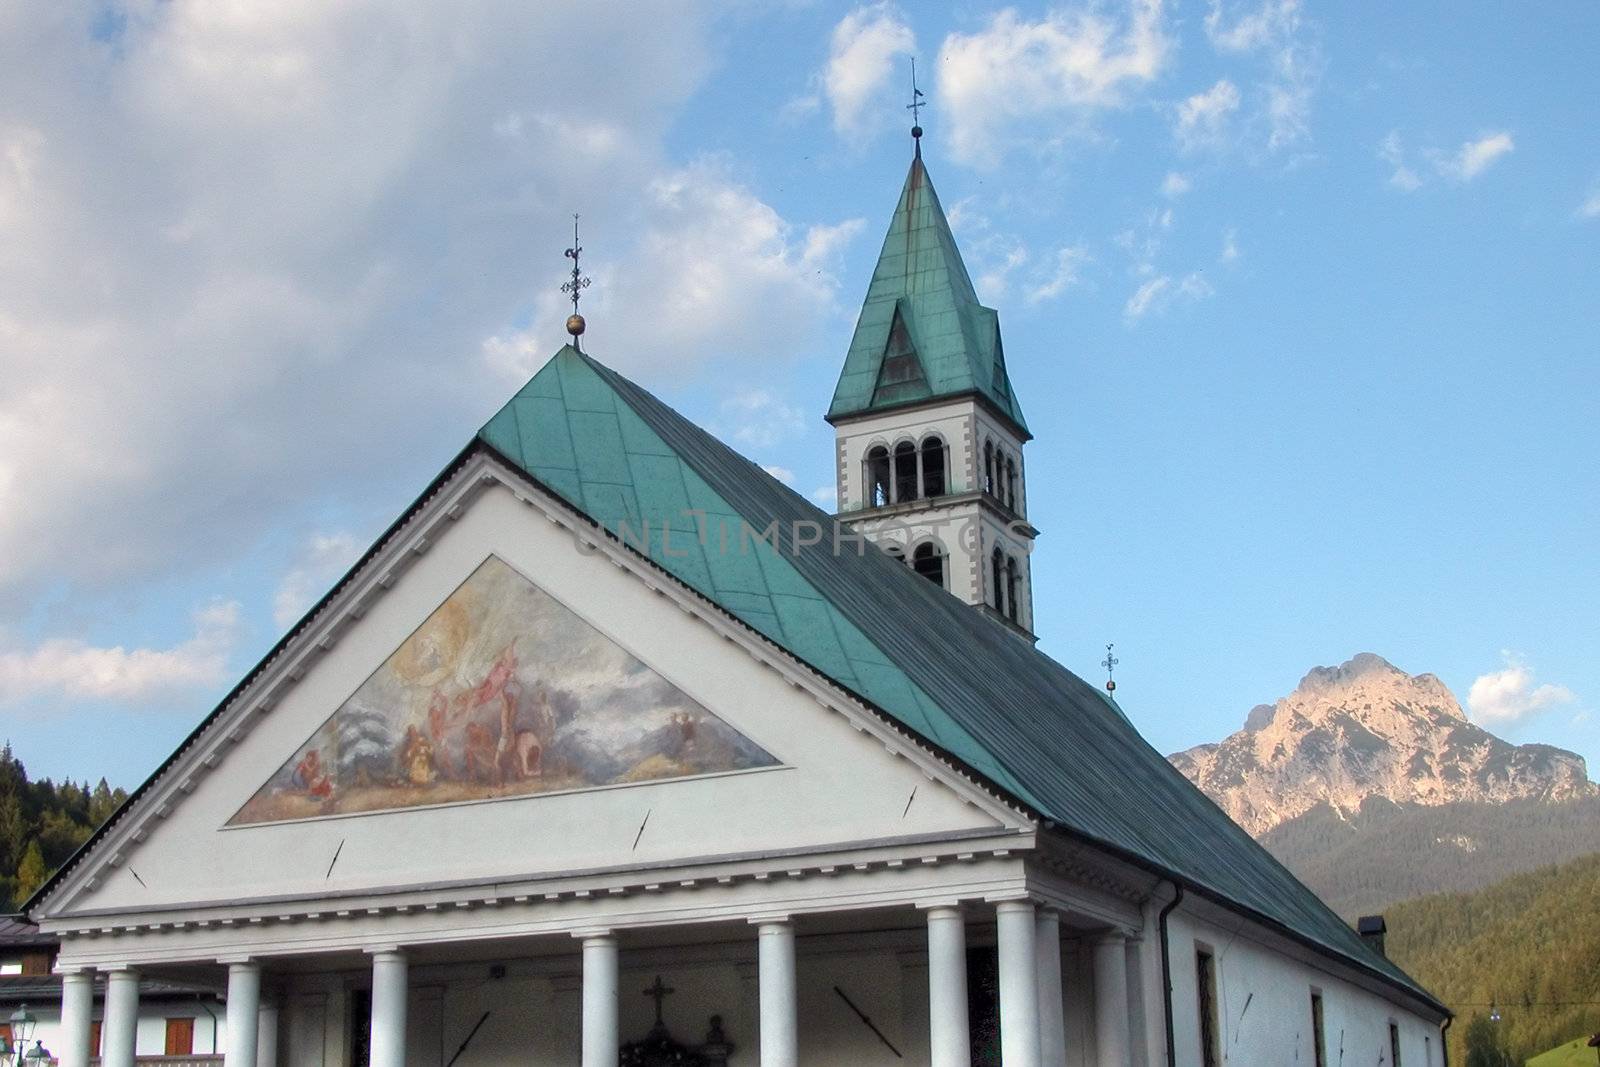 Dolomites Church, Italy, July 2009 by jovannig